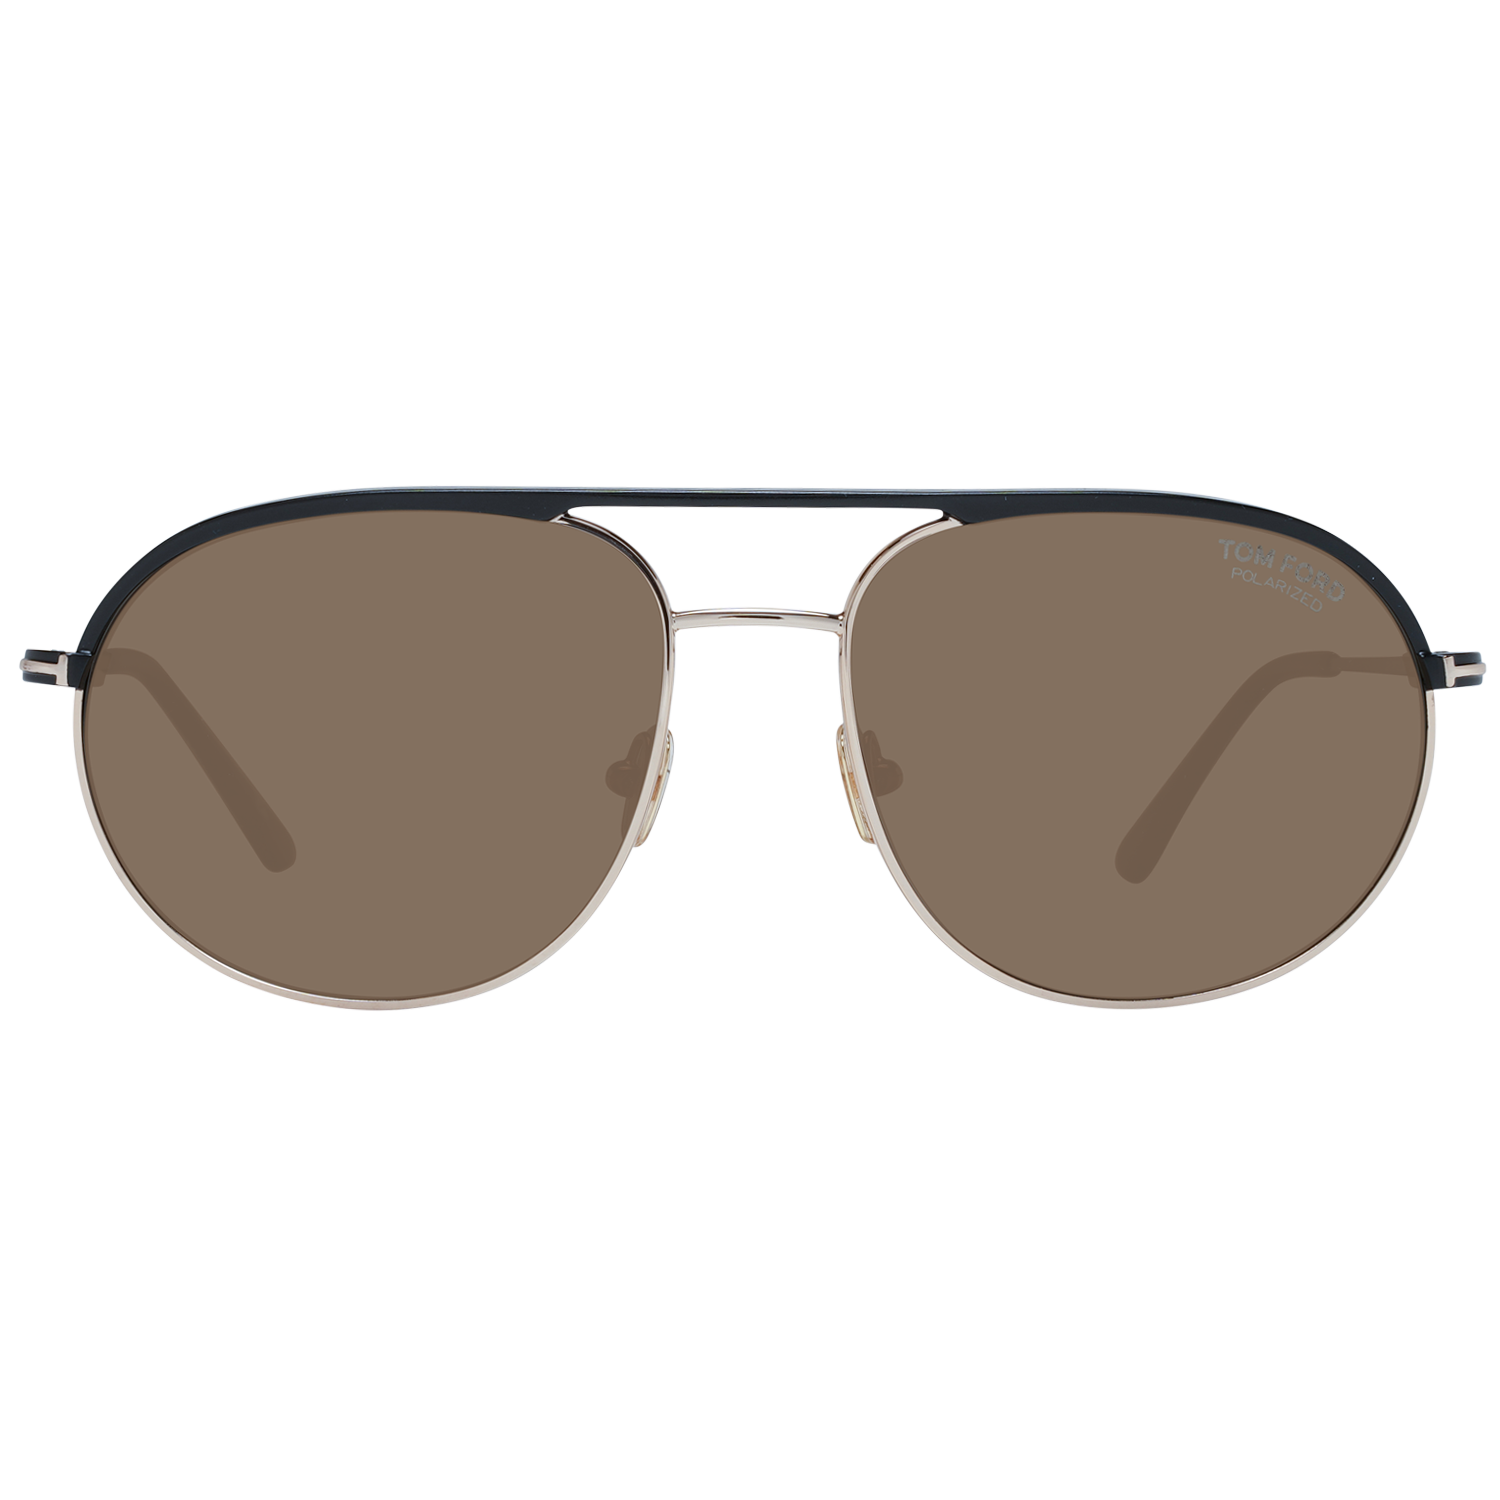 Tom Ford Sunglasses Tom Ford Sunglasses FT0772 02H 59mm Gio Eyeglasses Eyewear UK USA Australia 